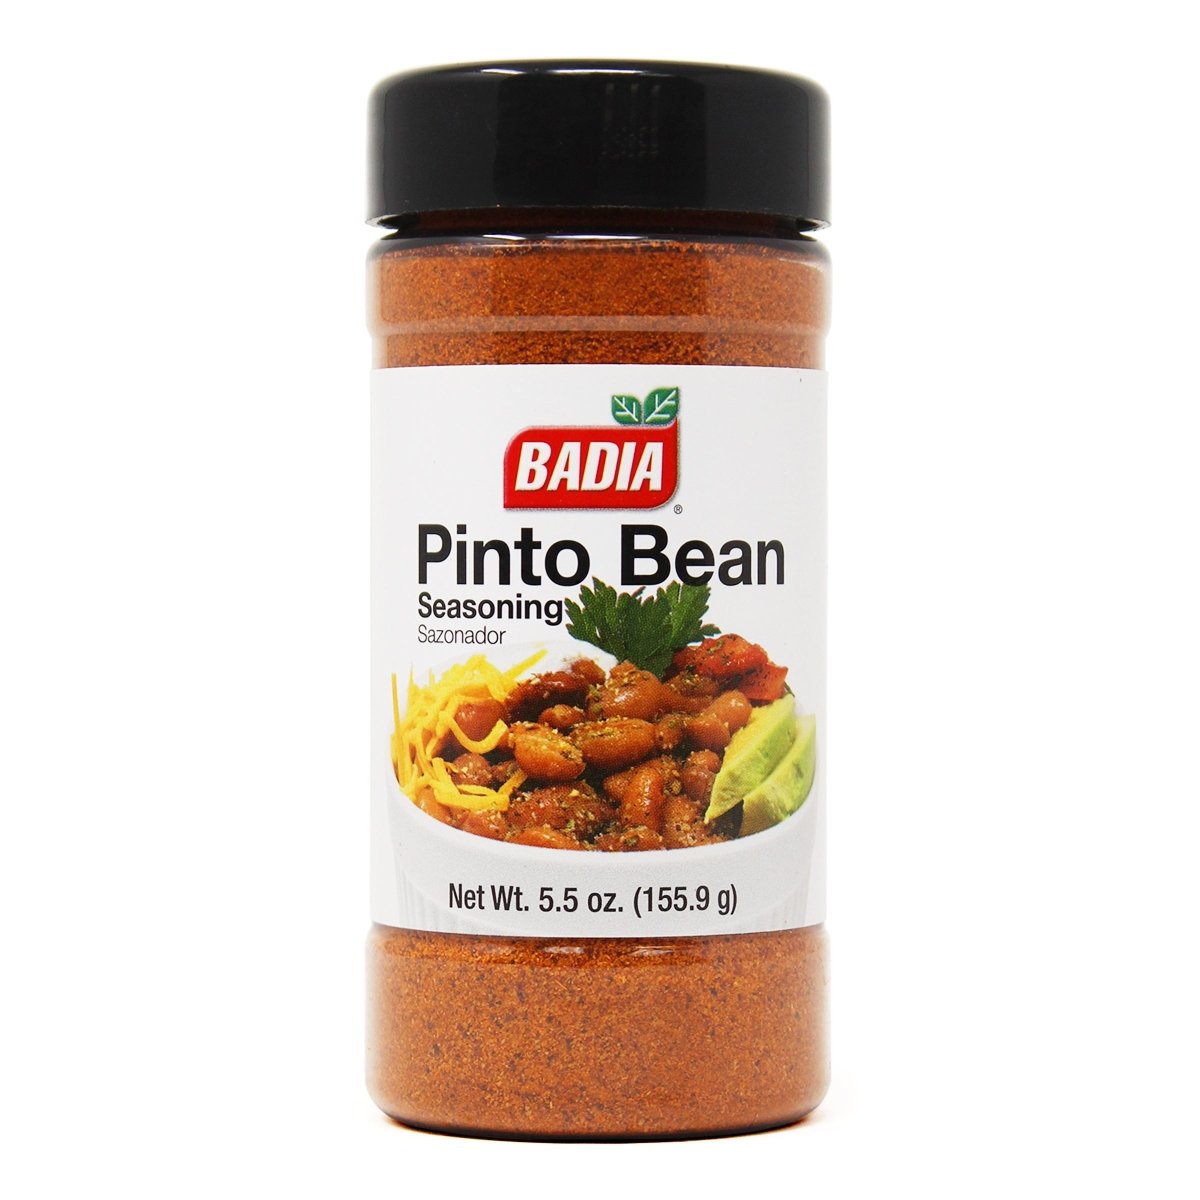 Badia Pinto Bean Seasoning 00754 - Texas Star Grill Shop 754